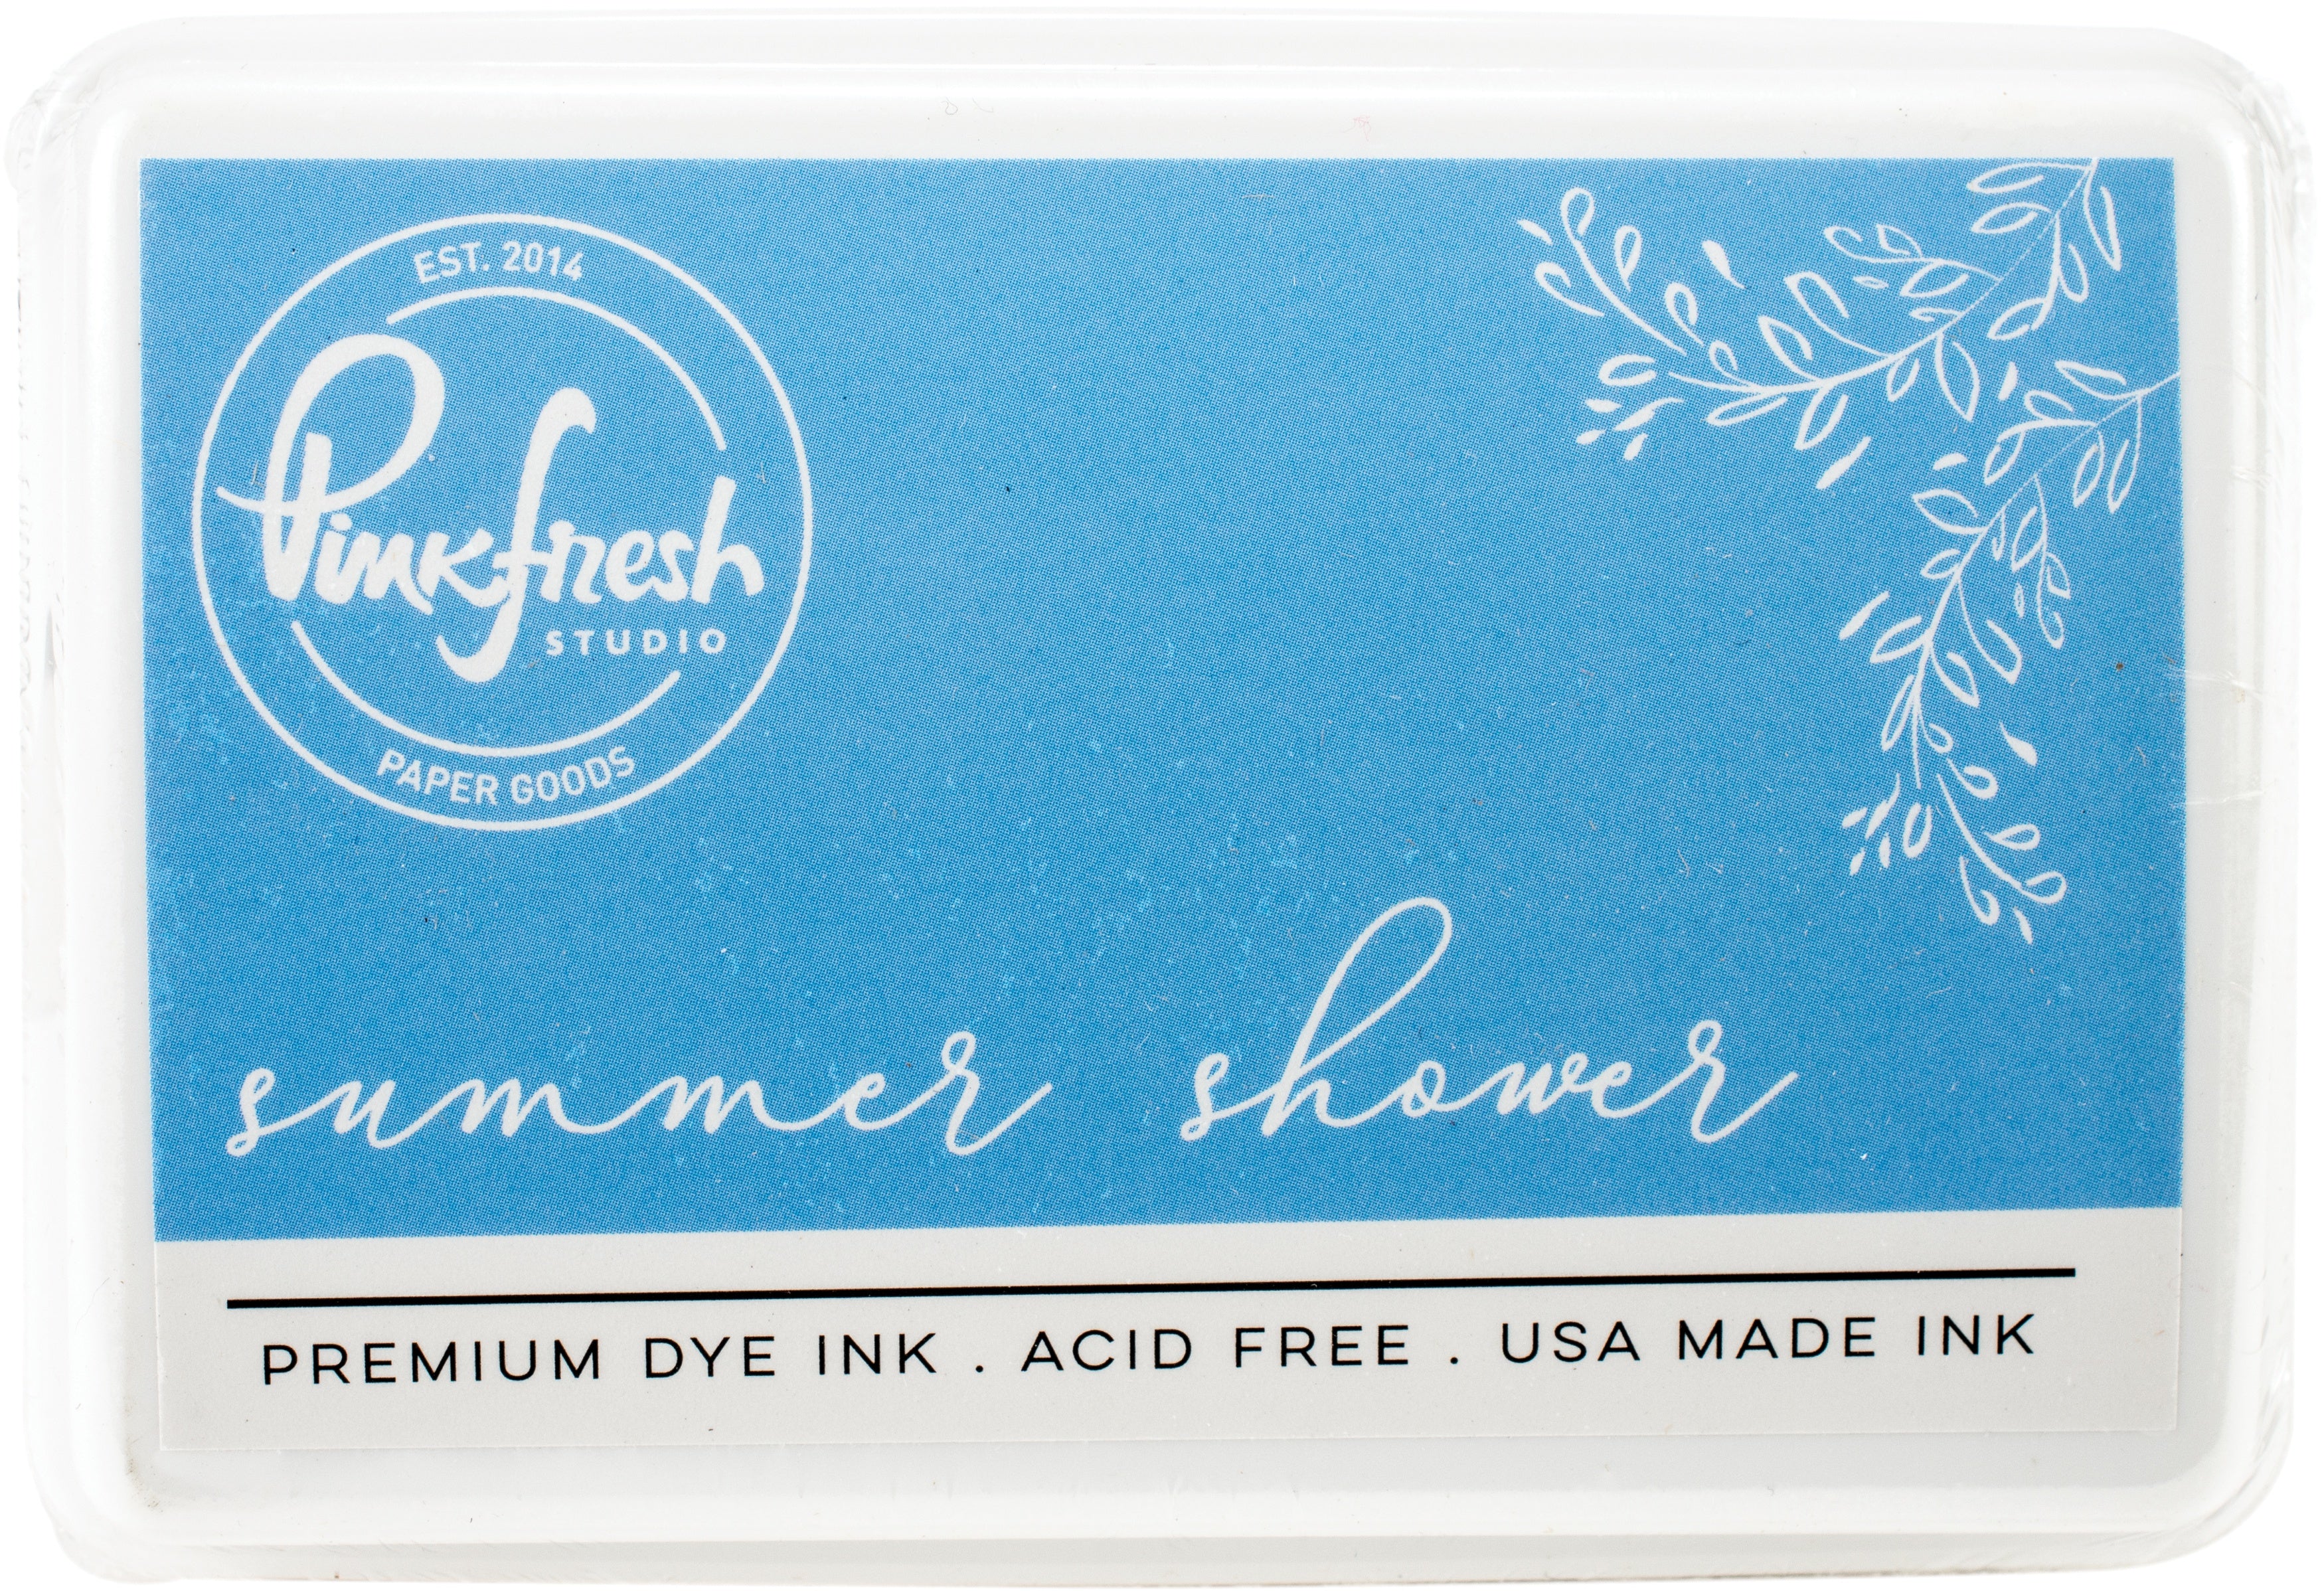 Pinkfresh Summer Shower Dye Ink Pad